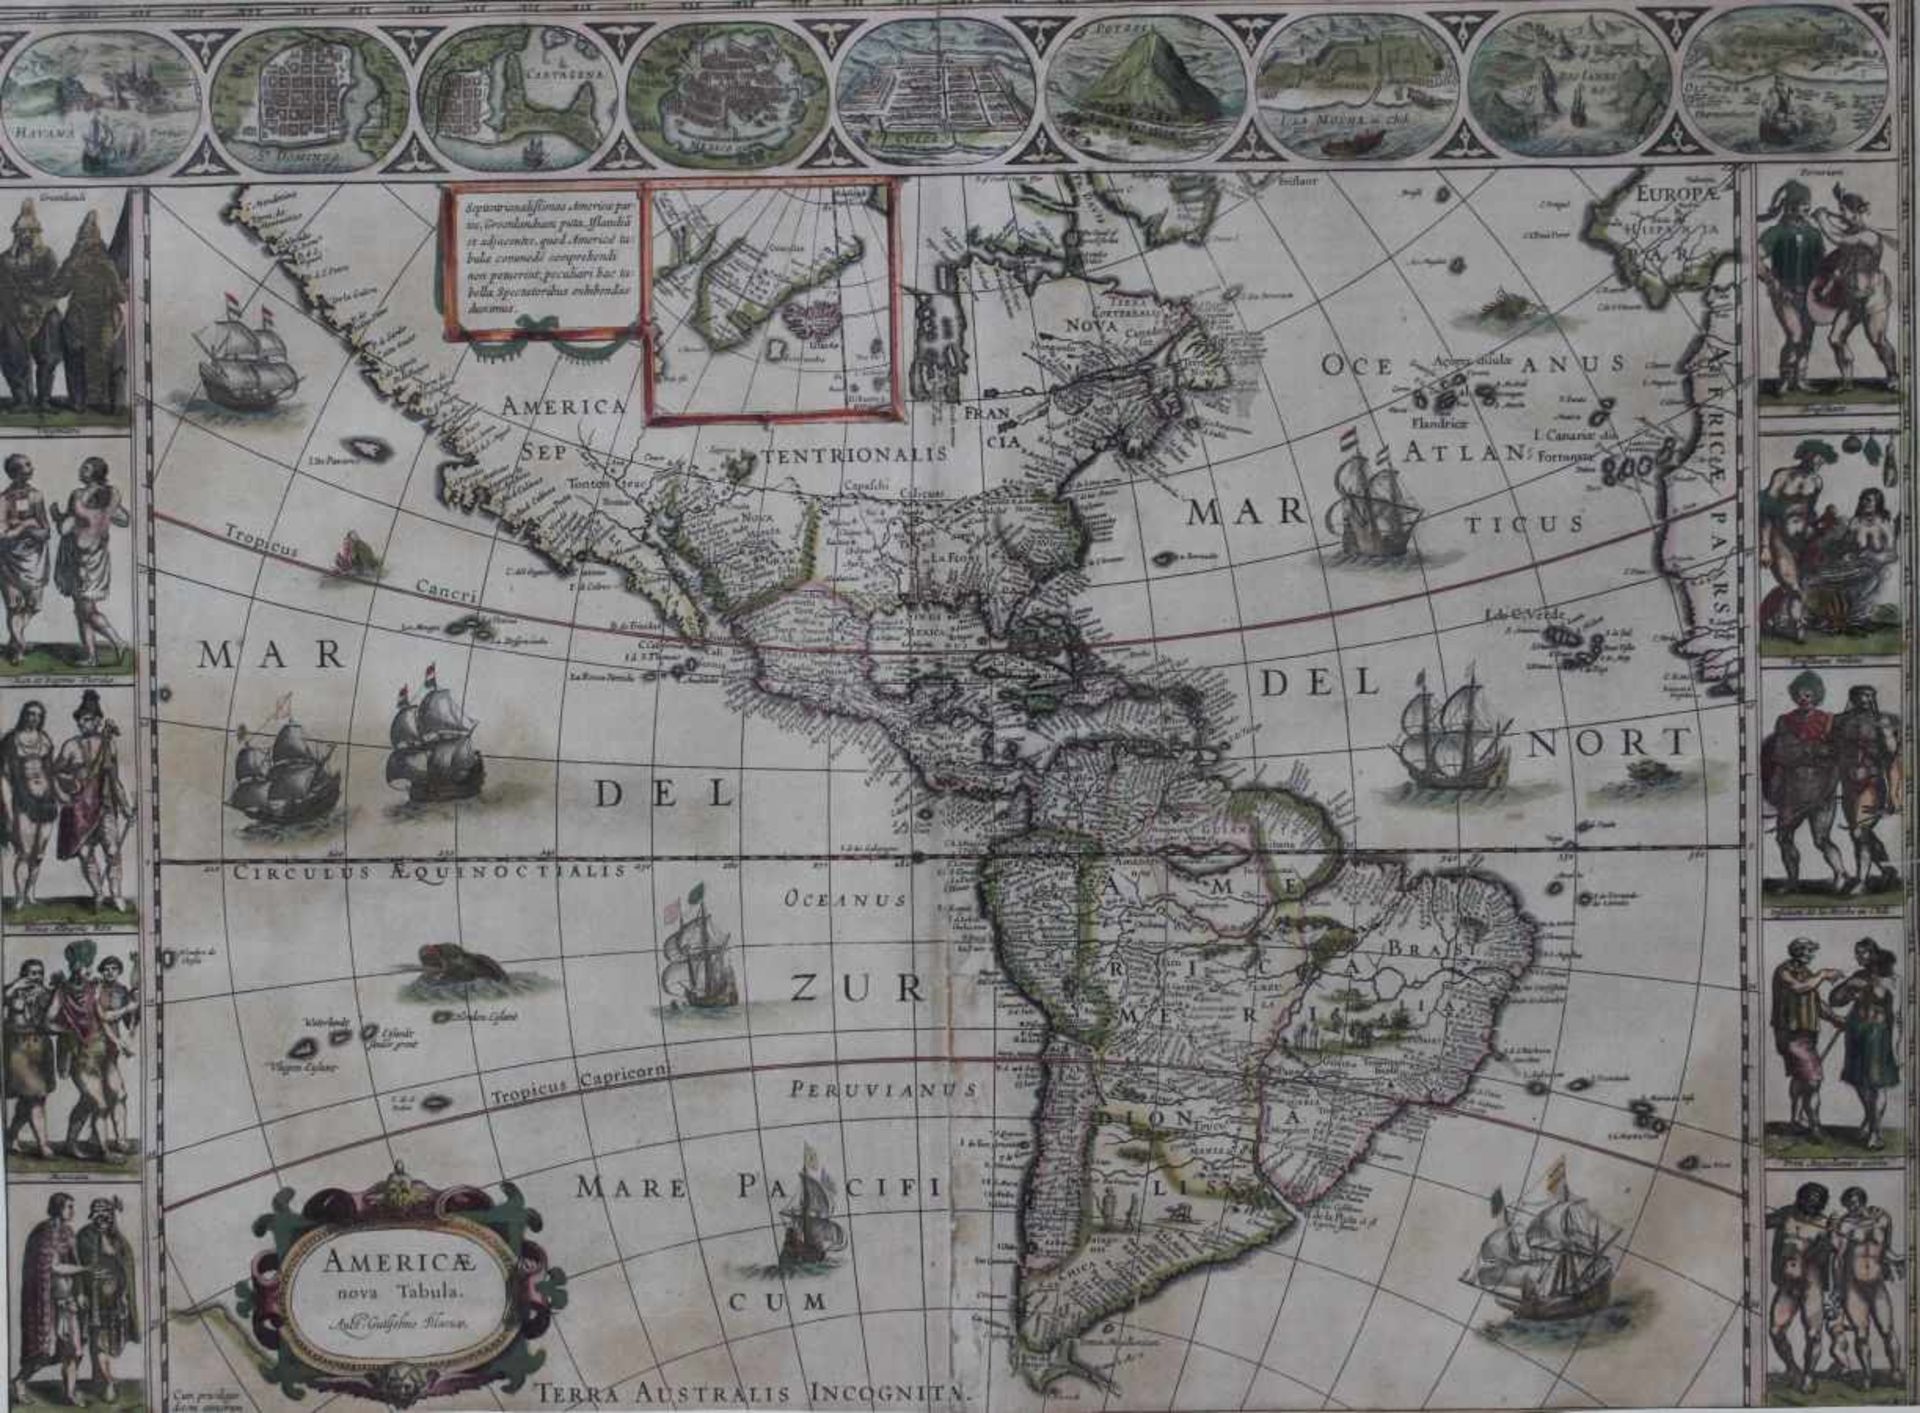 Kupferstich - Willem Blaeu (1571 Alkmaar - 1638 Amsterdam) "Americae nova Tabula, Auct. Guiljelmo